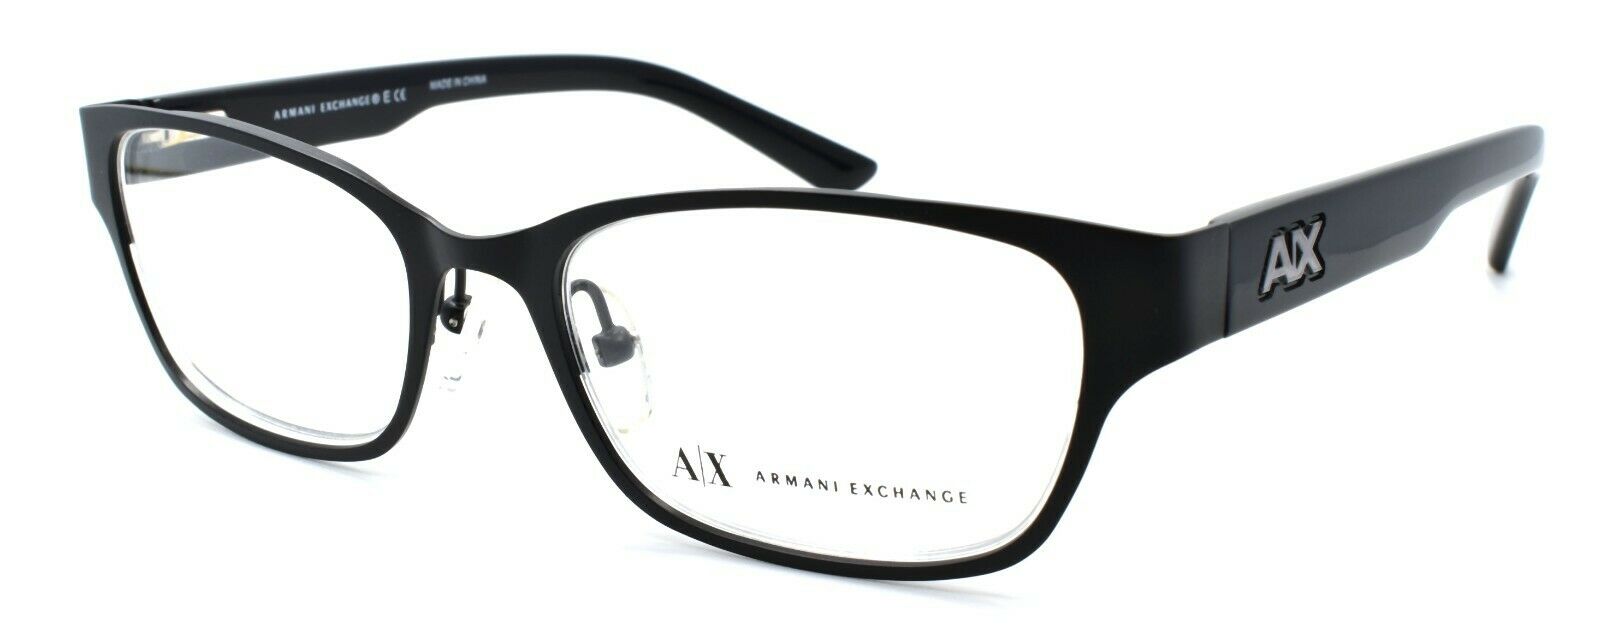 1-Armani Exchange AX1013 6053 Women's Eyeglasses Frames 50-18-135 Satin Black-8053672283259-IKSpecs